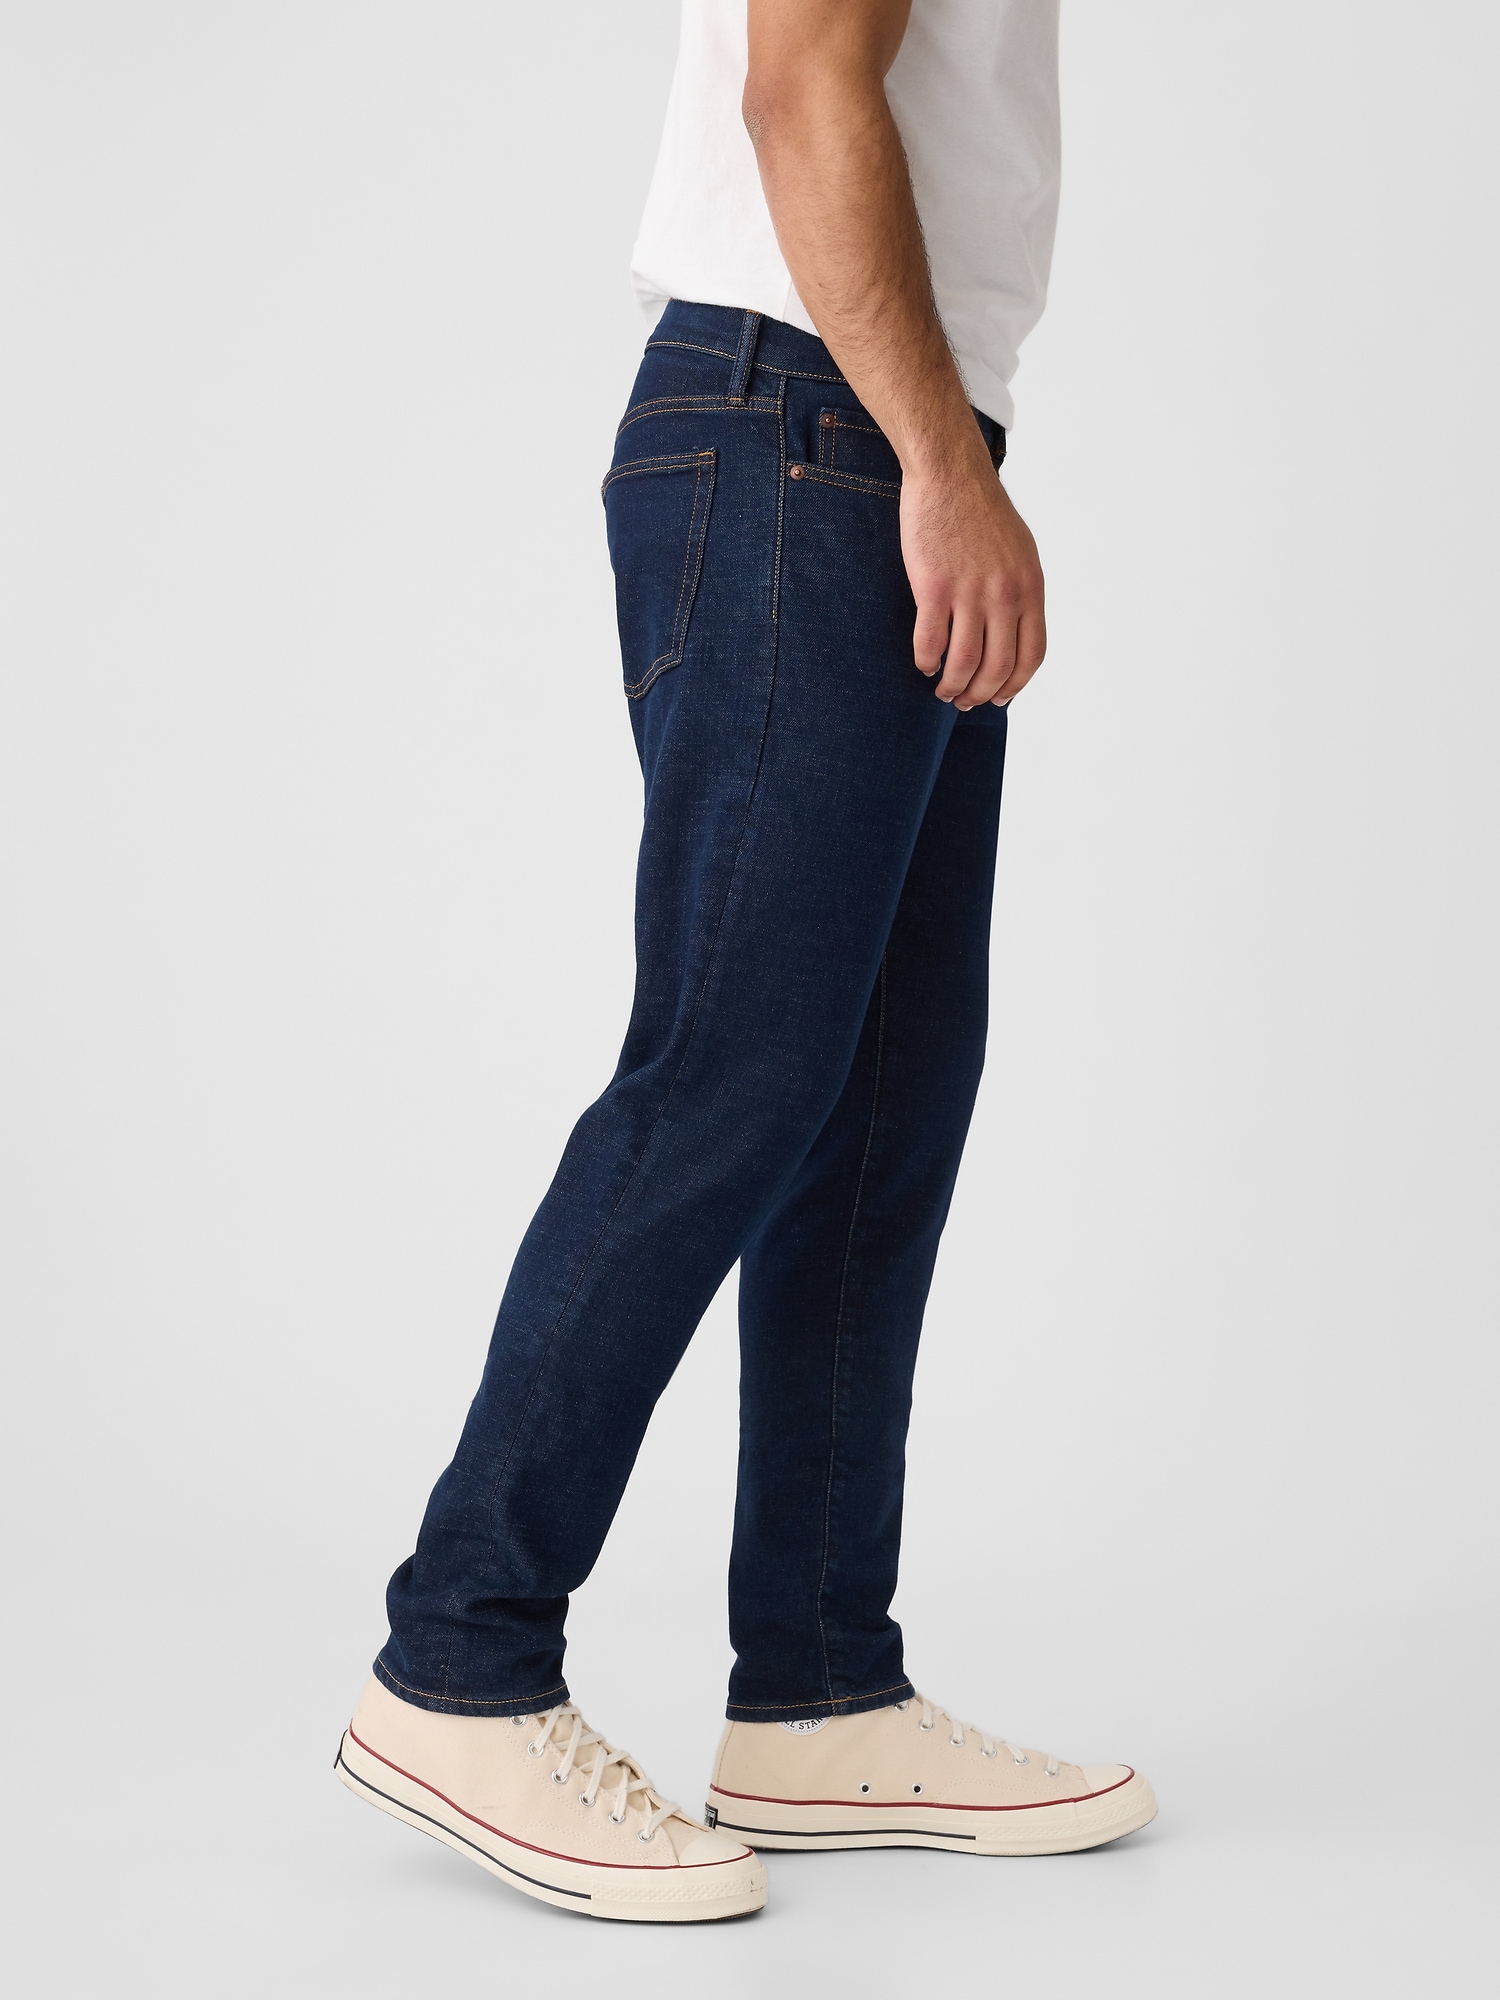 Men's Gap Jeans